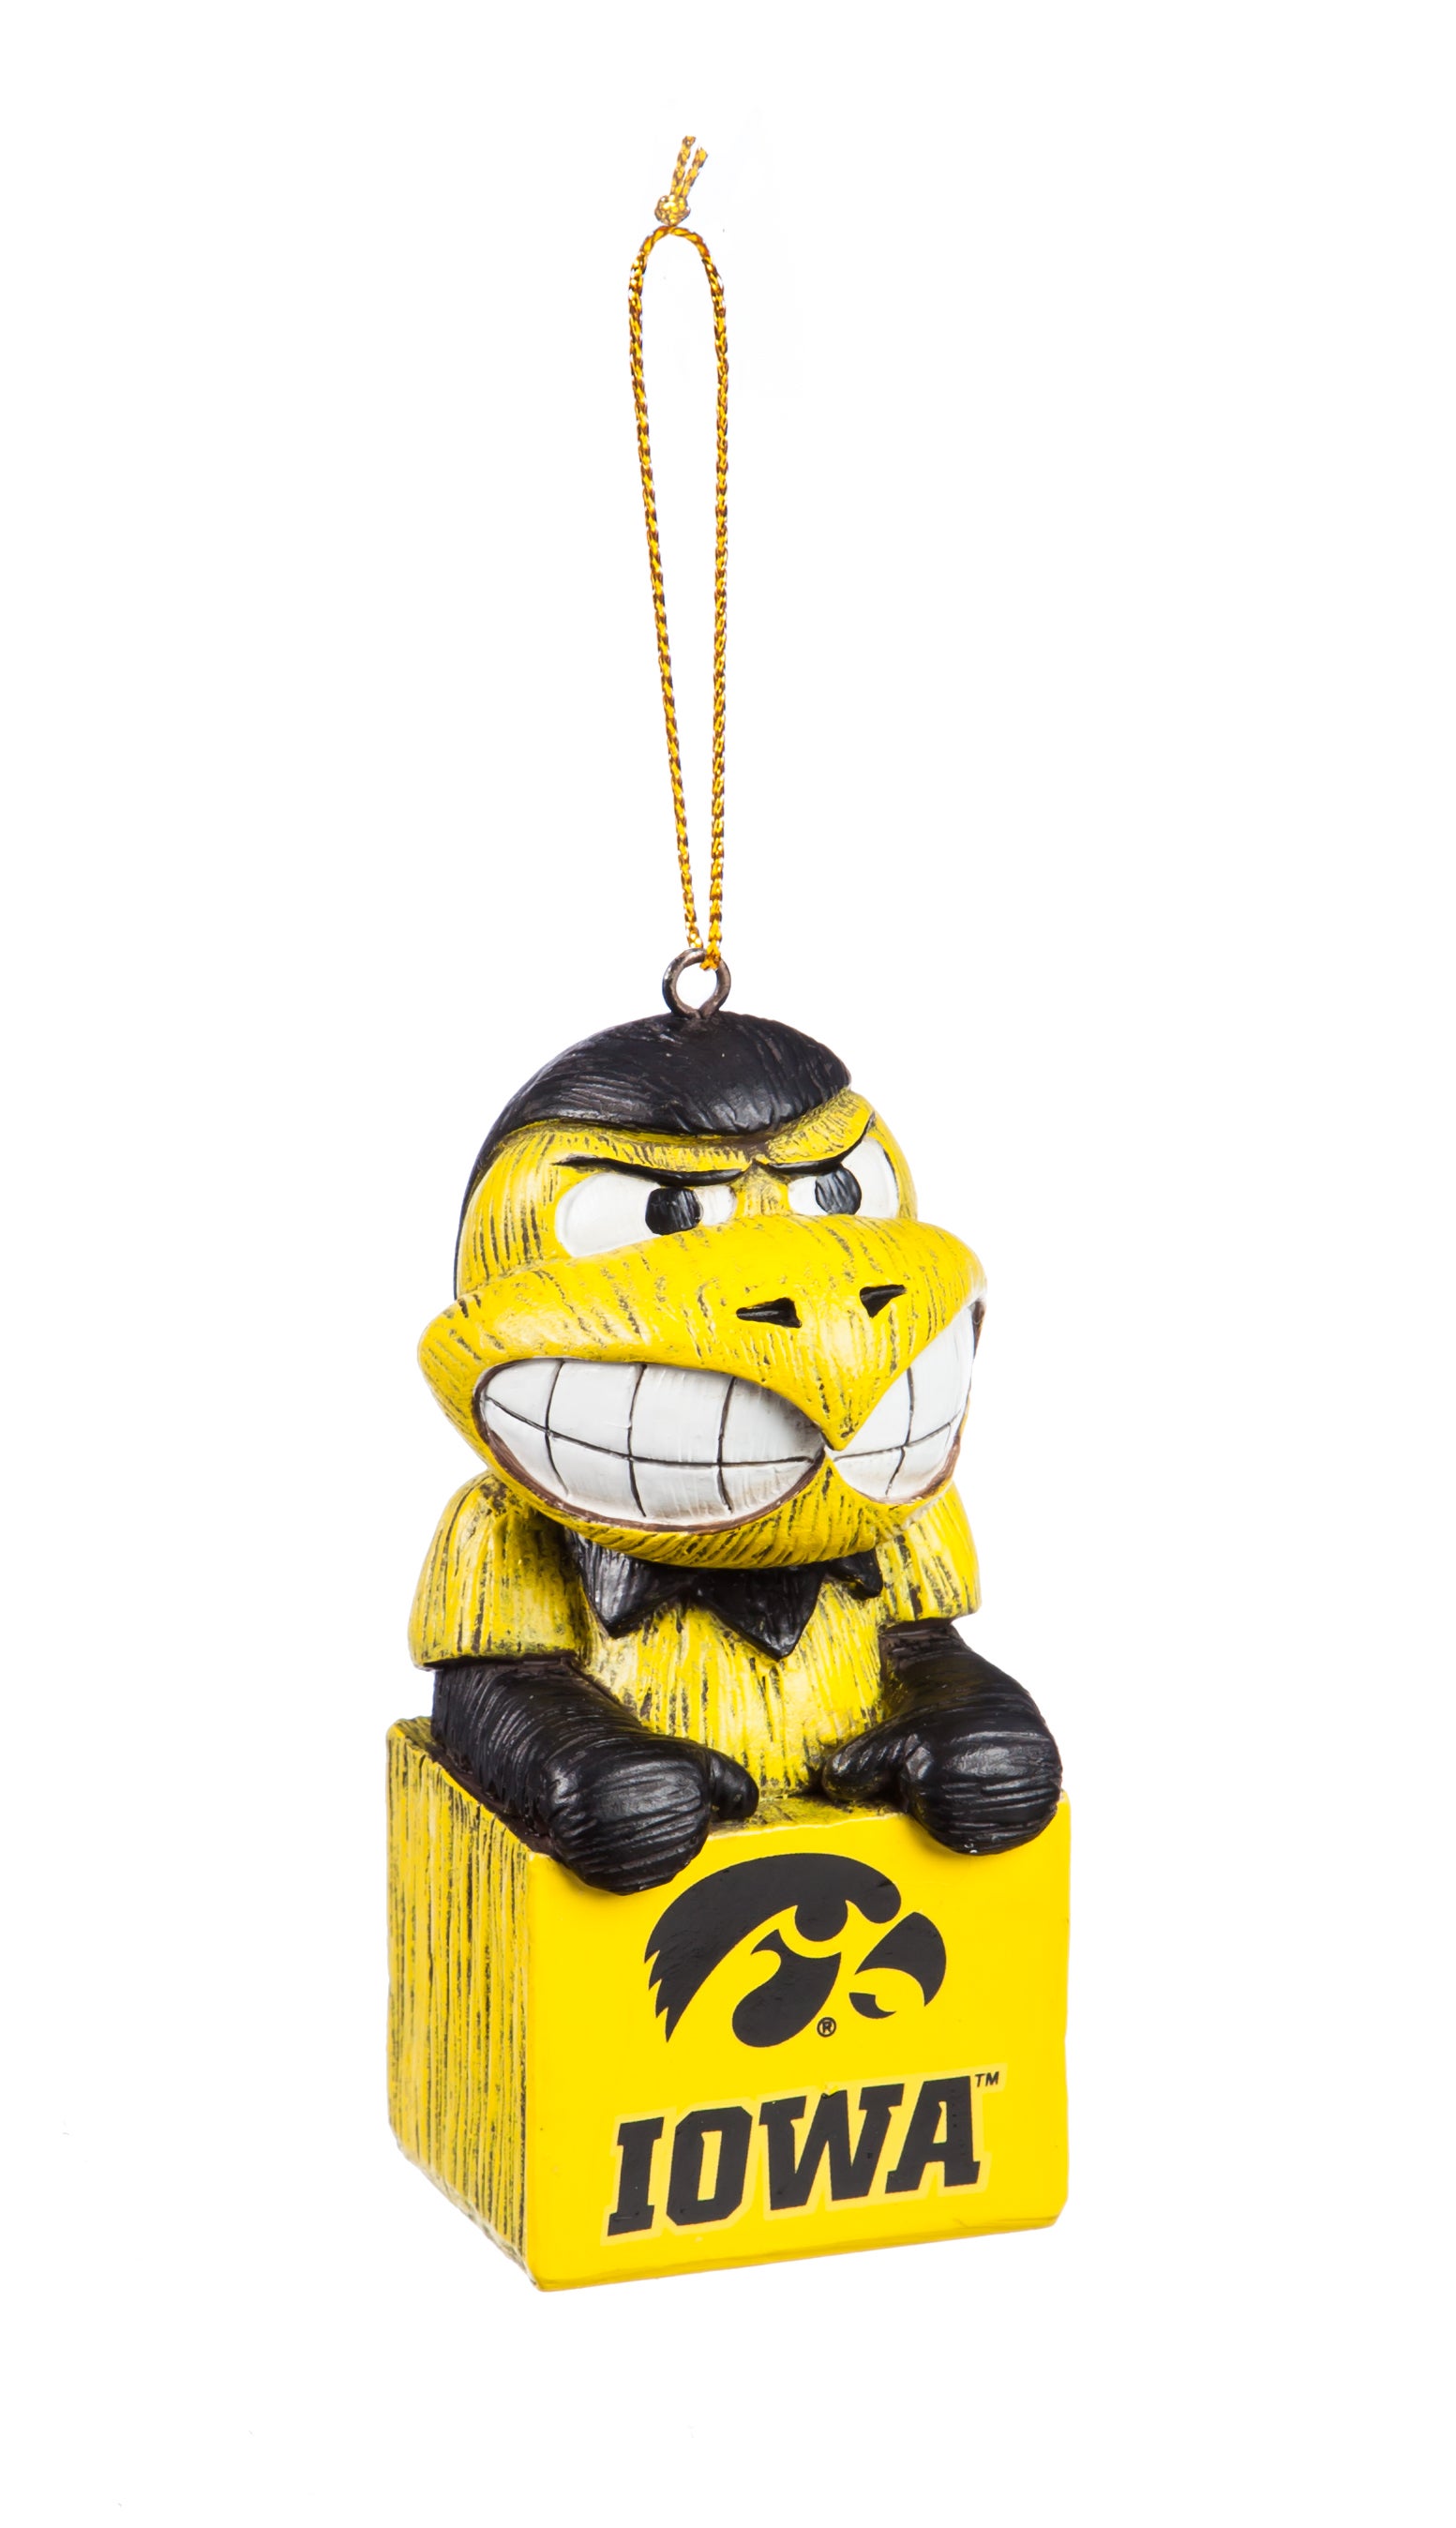 University of Iowa Mascot Ornament